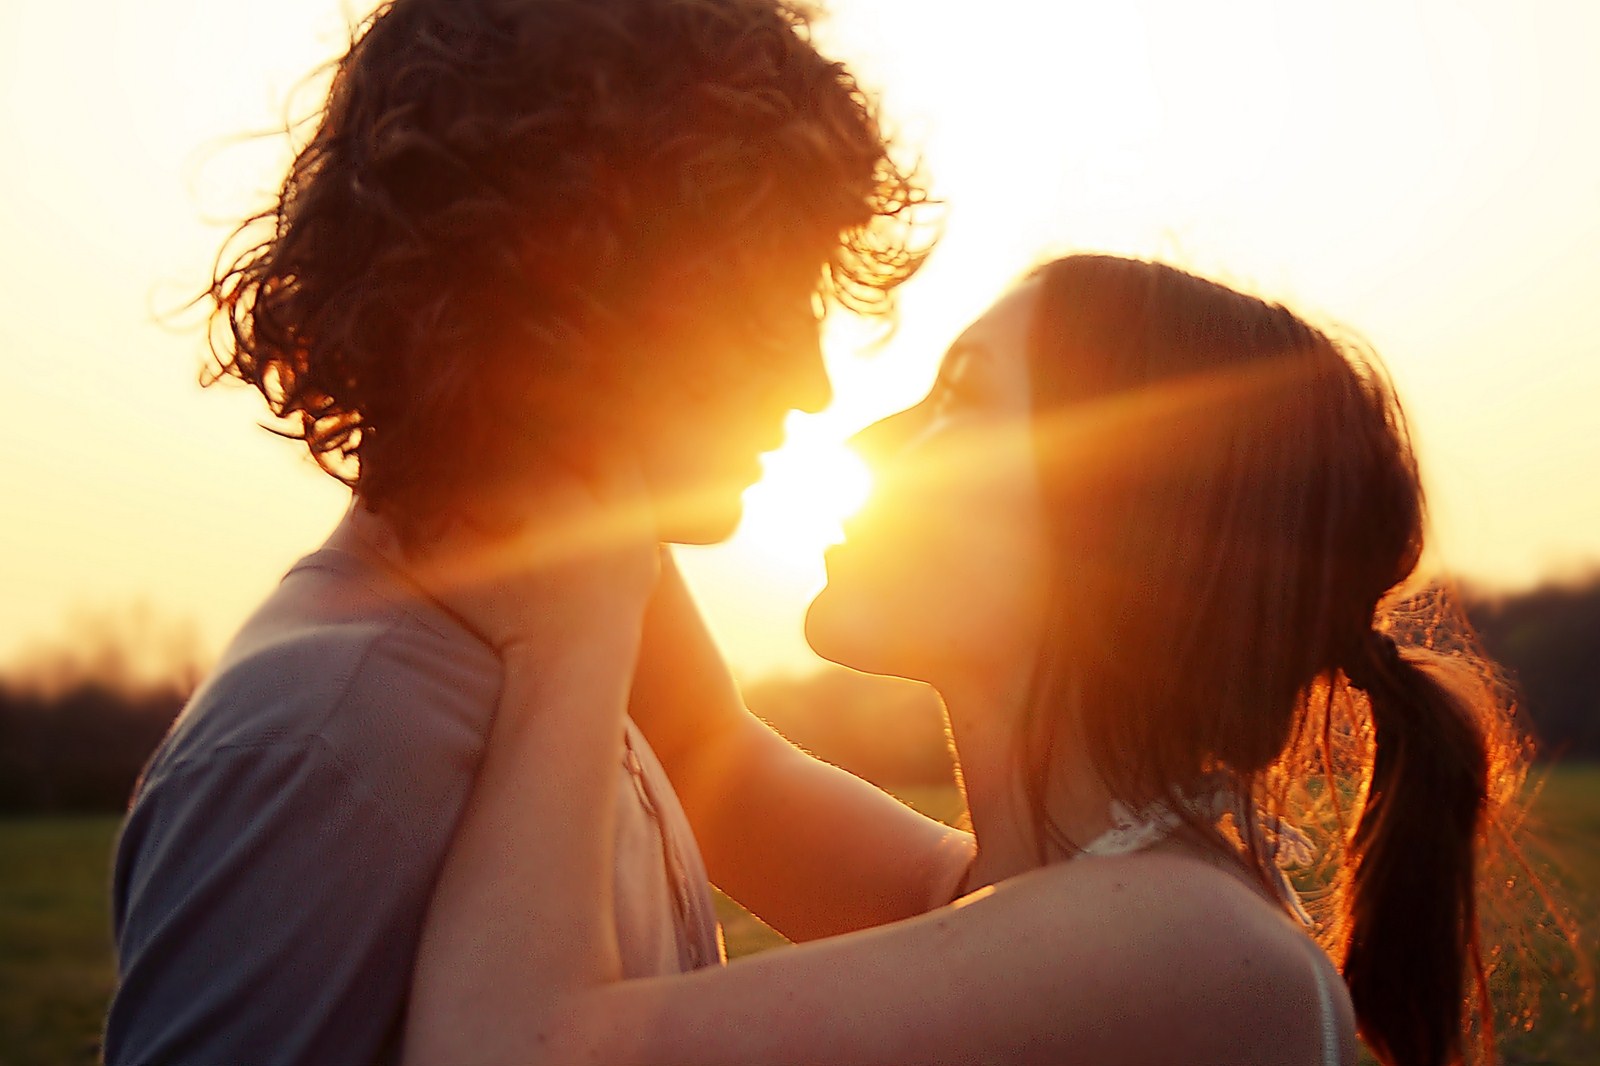 http://s5.picofile.com/file/8113901392/couple_romantic_wallpapersromantic_hd_wallpapers_sun_summer_love_couple_magic_moment_mood_w0viloe5.jpg